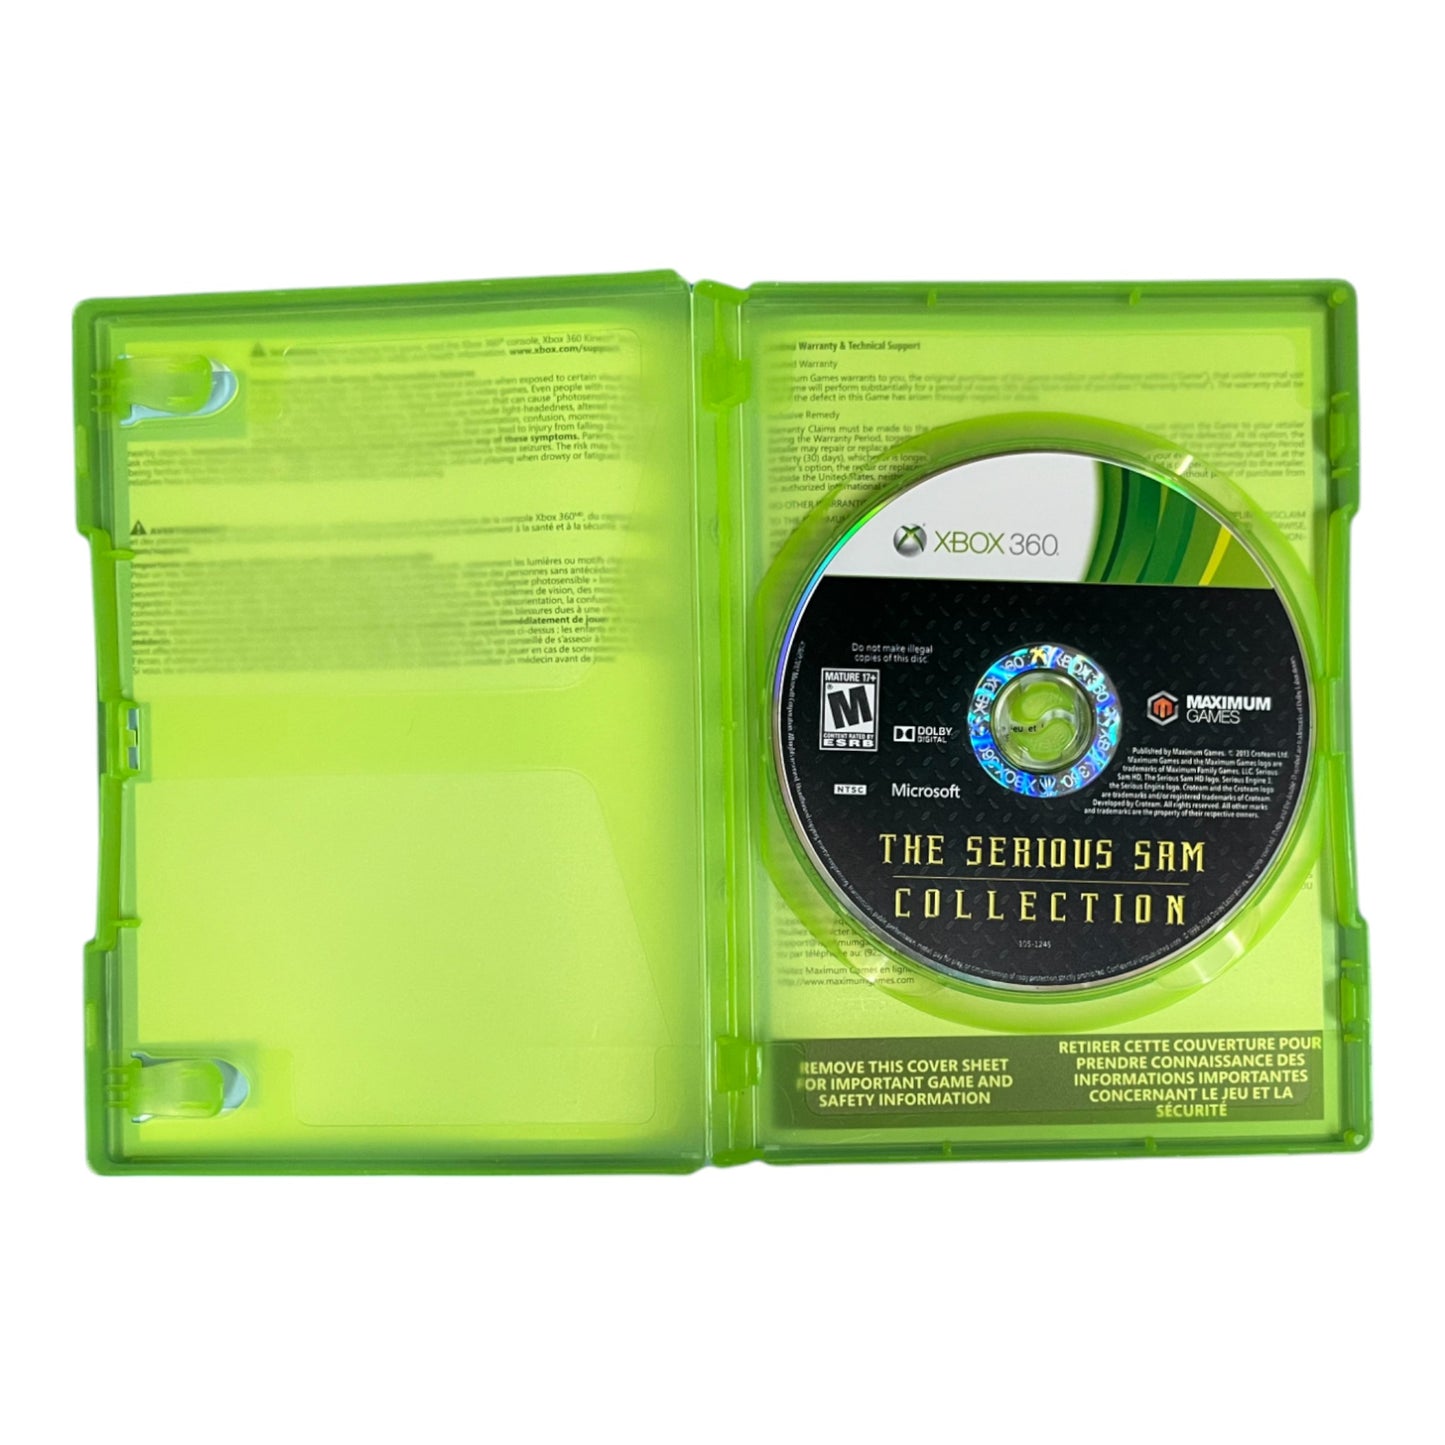 Serious Sam Collection (Xbox360)